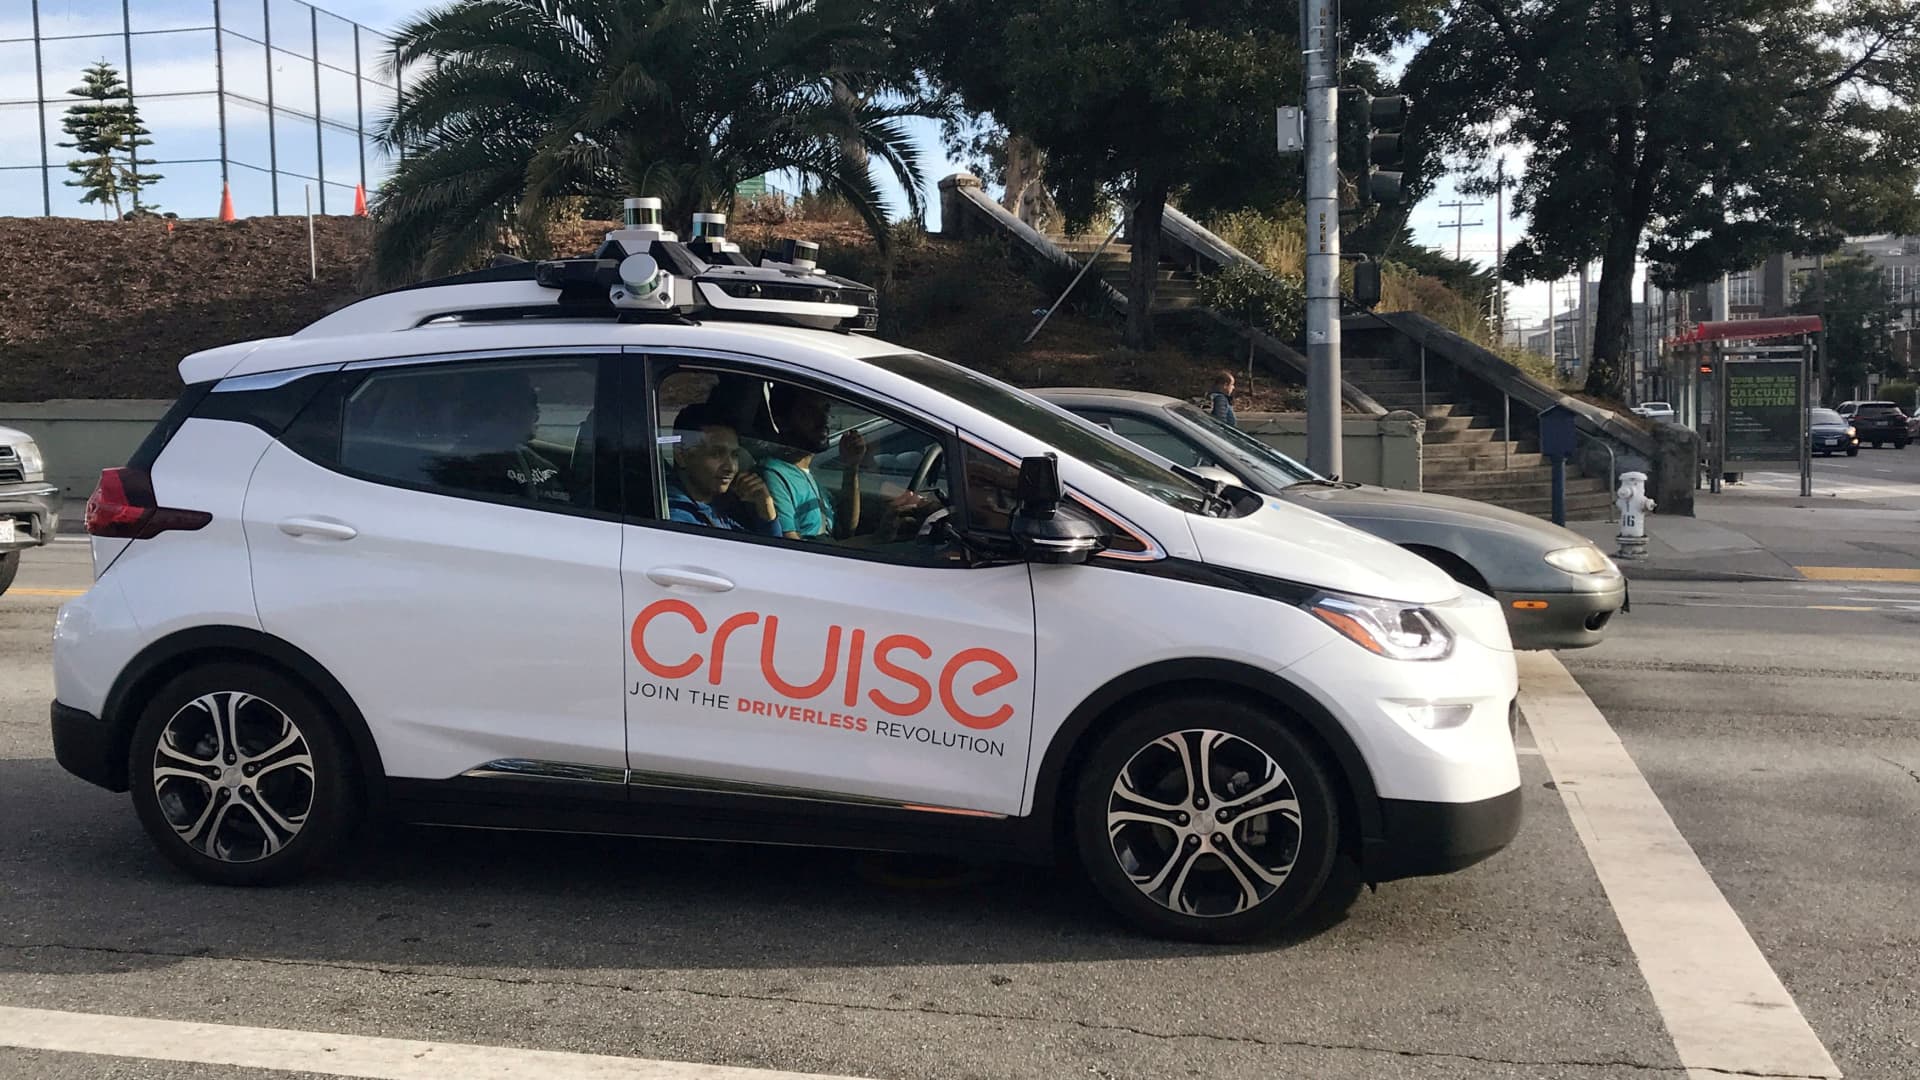 Cruise self-driving car in San Francisco fire truck crash, one injured